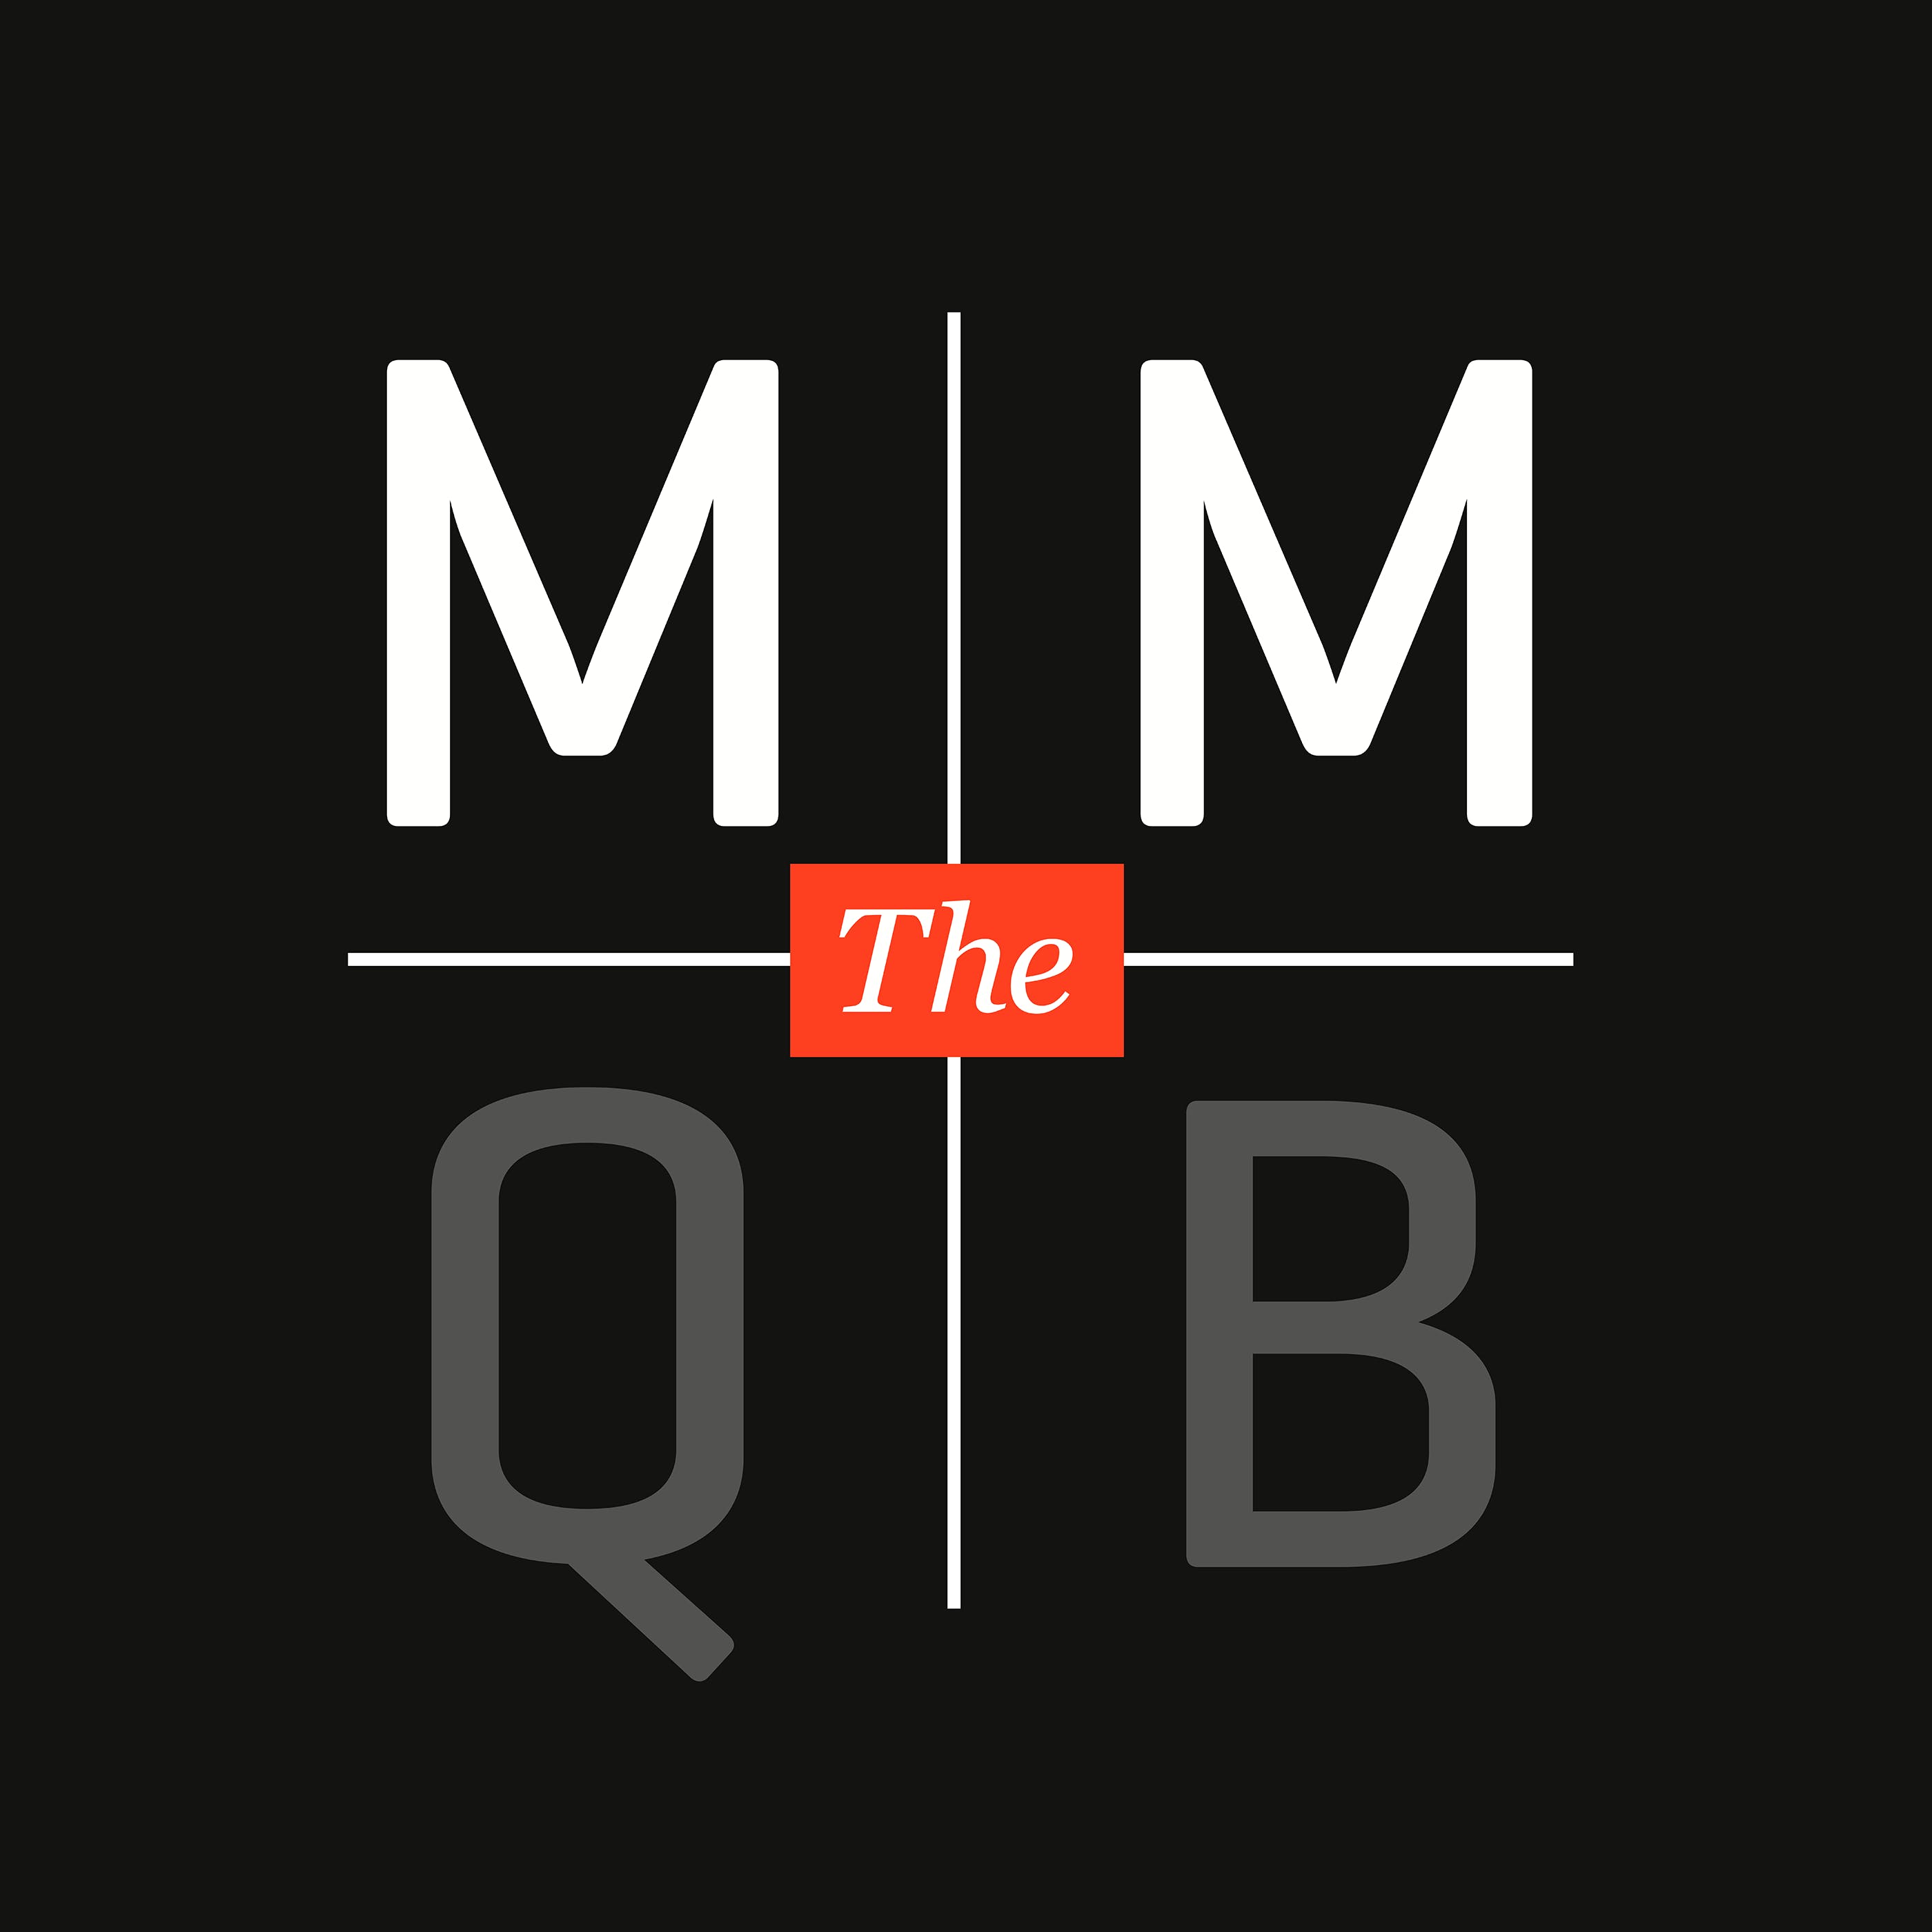 2020's Make-or-Break(ish) Quarterbacks | Monday Morning Podcast